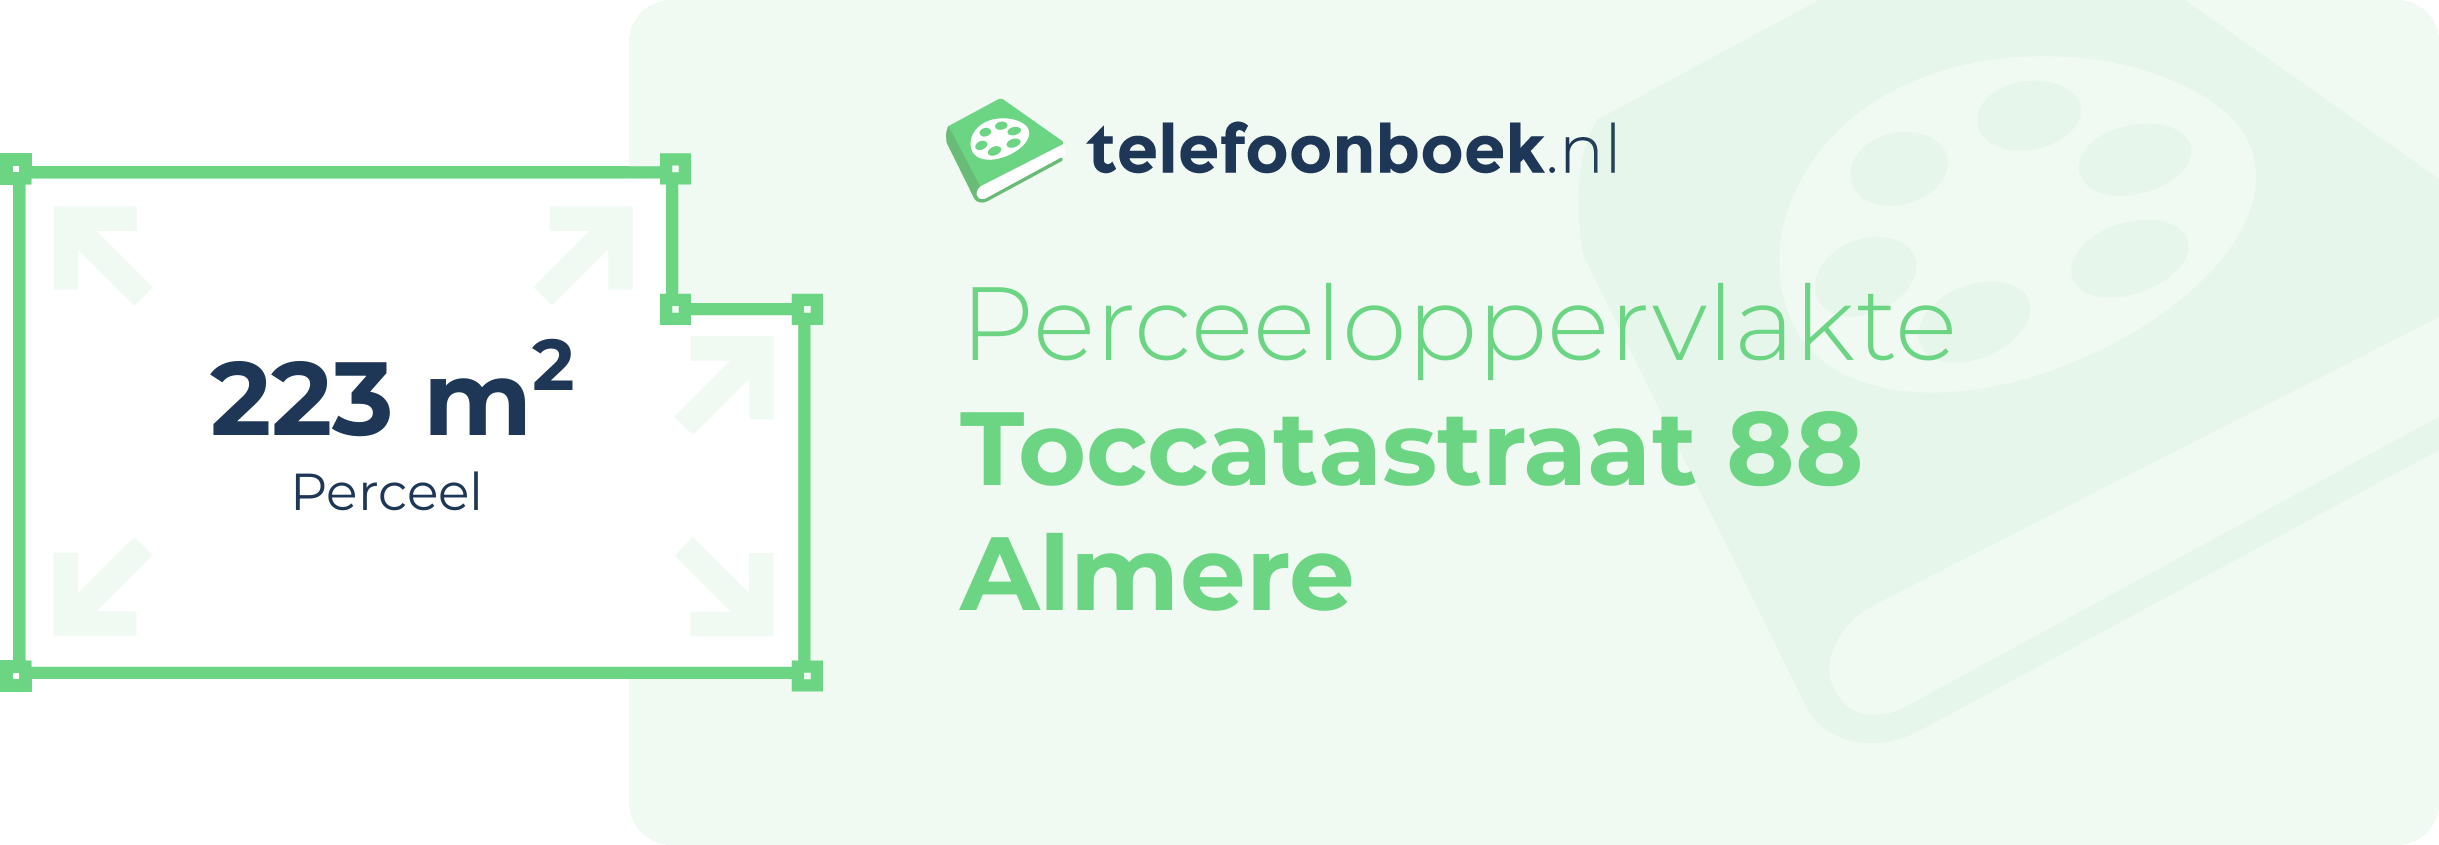 Perceeloppervlakte Toccatastraat 88 Almere